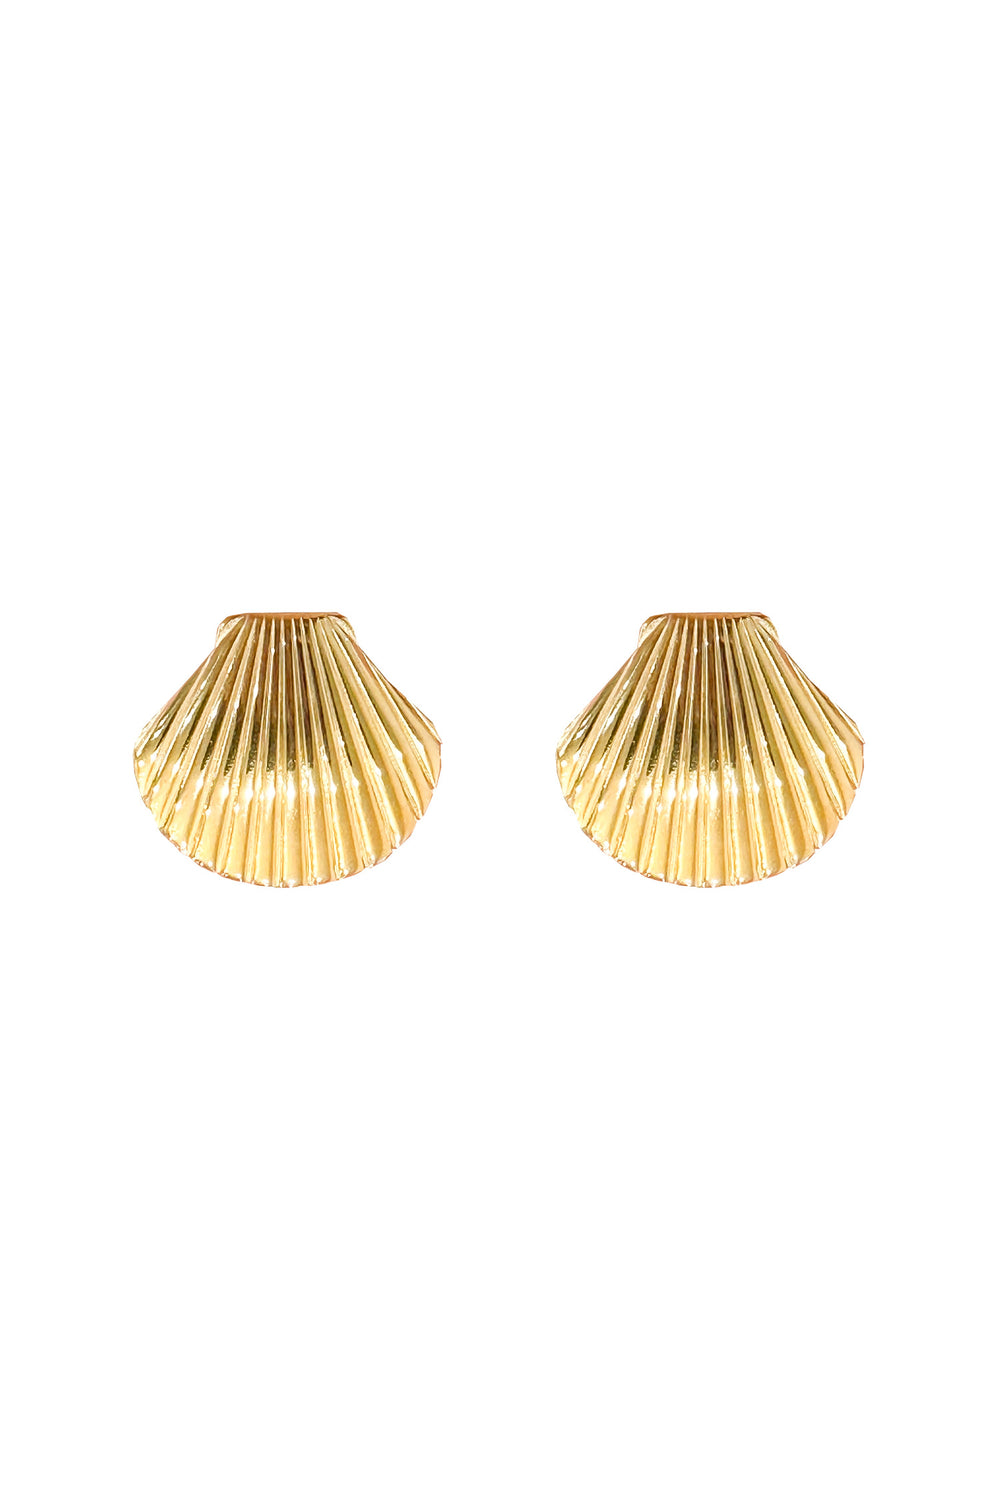 Maurita Gold Shell Earrings